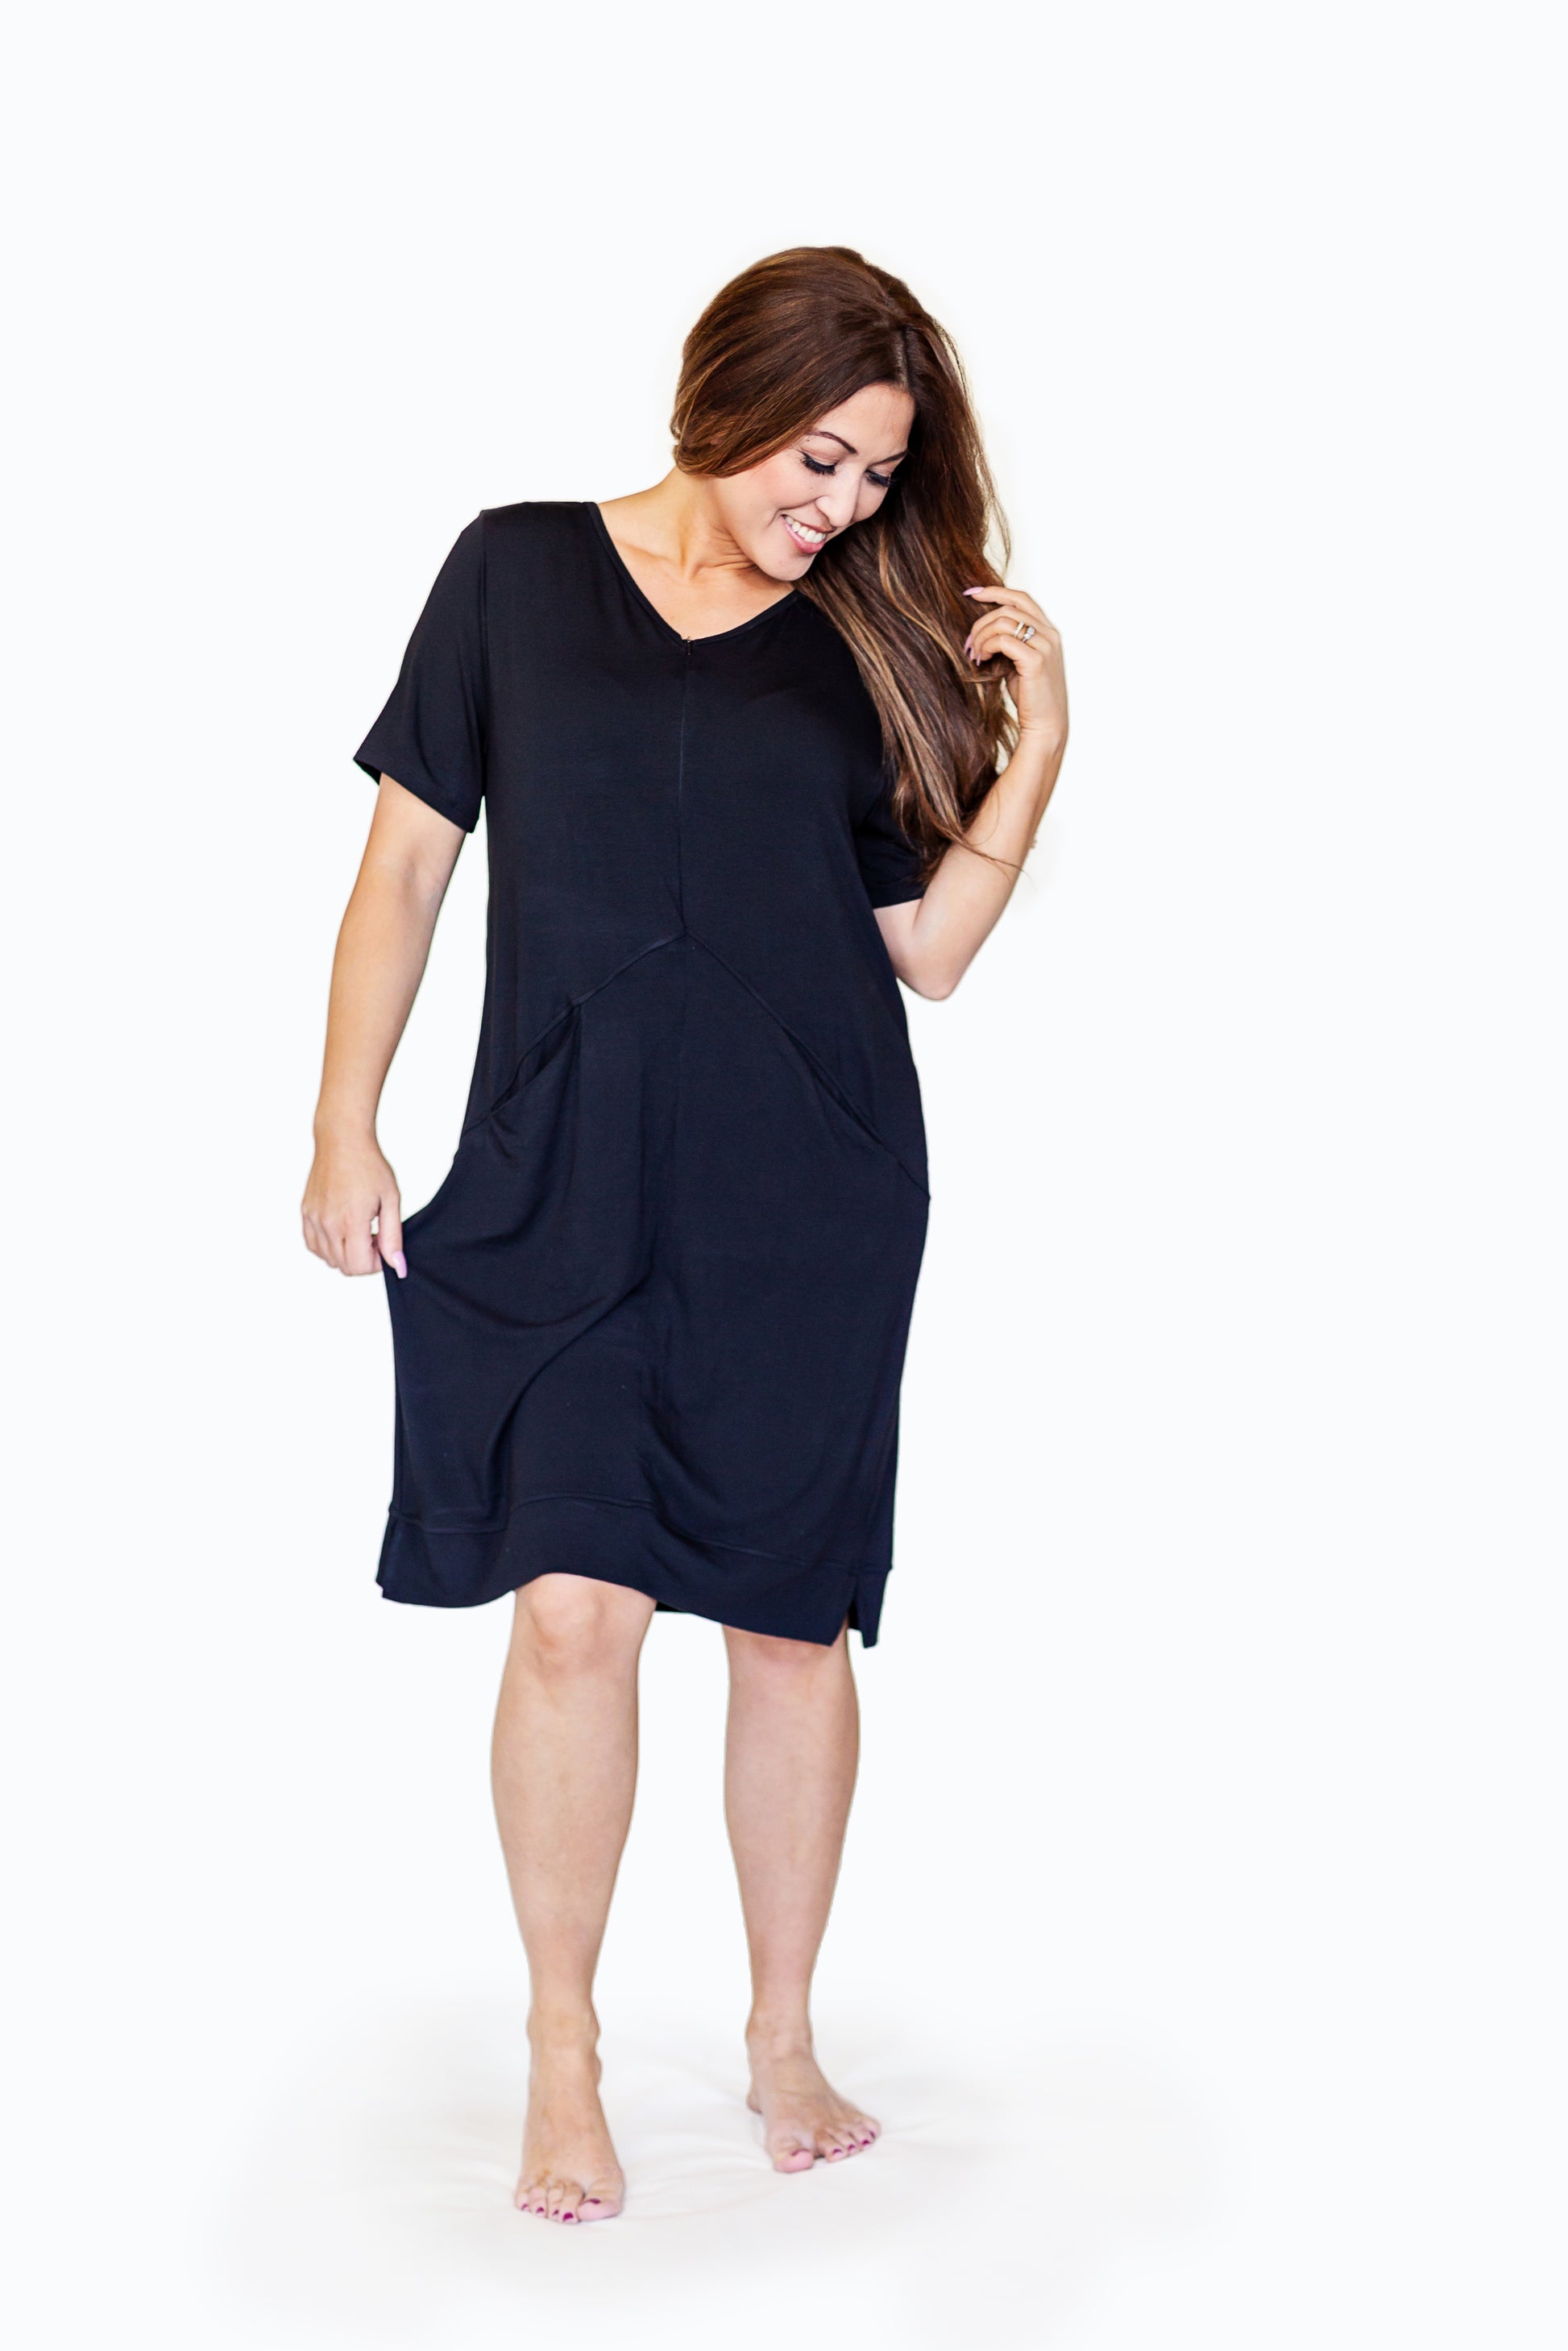 Black Dress with Front Zipper. Skin-to-skin and nursing friendly. Postpartum friendly dress.